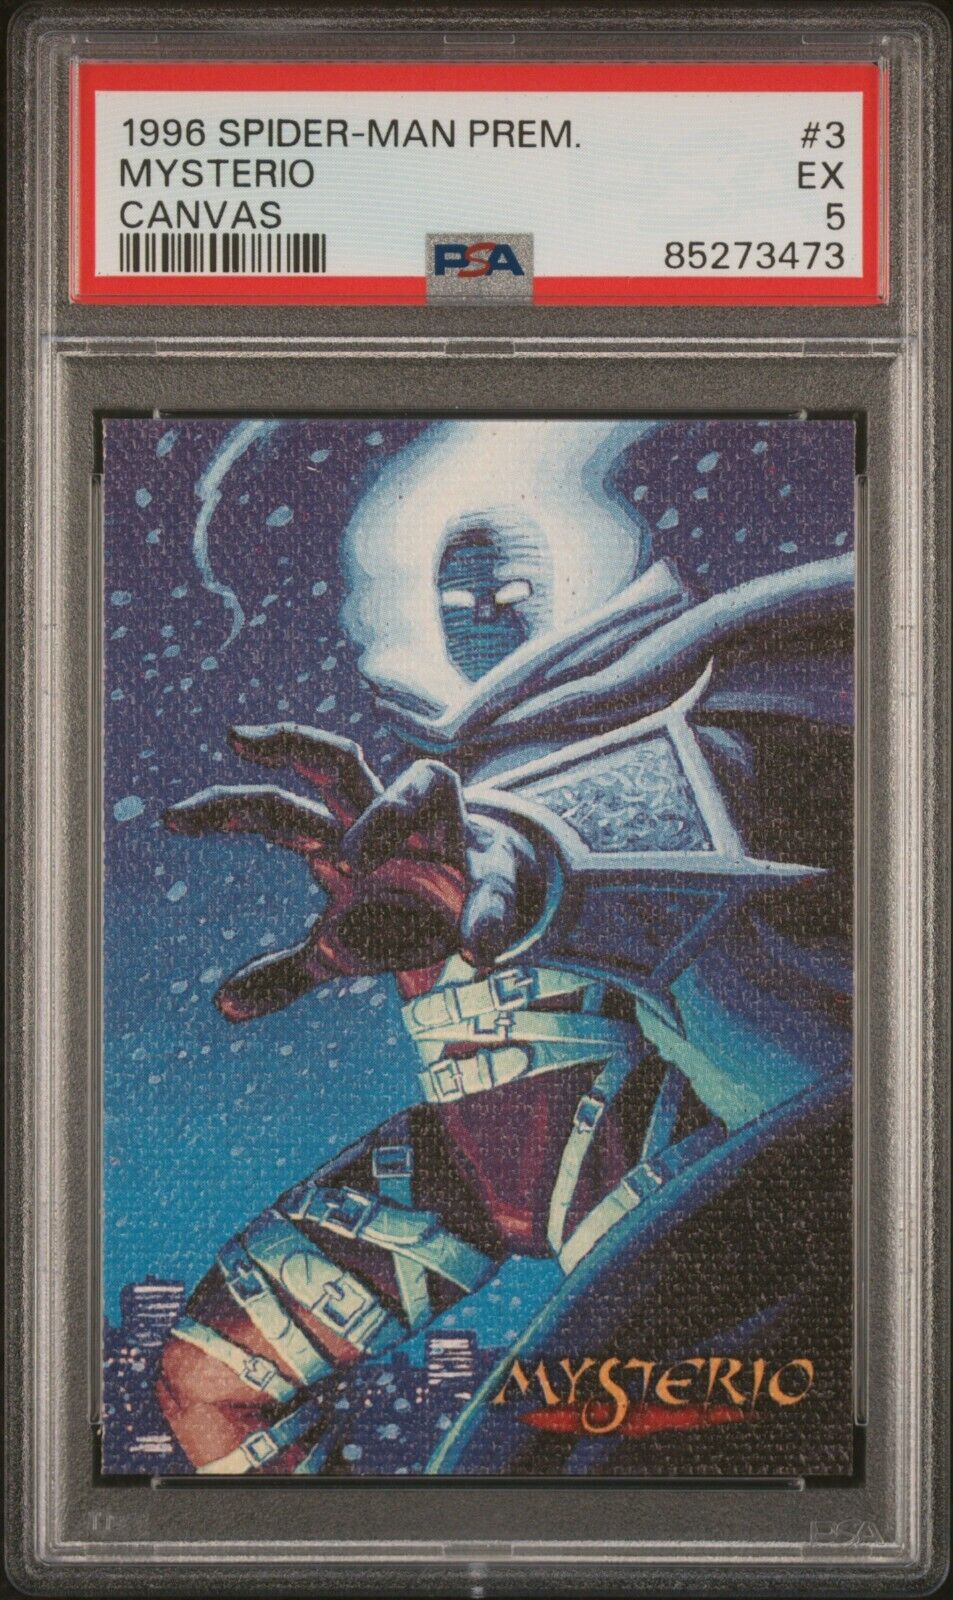 1996 Fleer/Skybox Spider-Man Premium Canvas Insert #3/6 Mysterio PSA 5 EX Graded